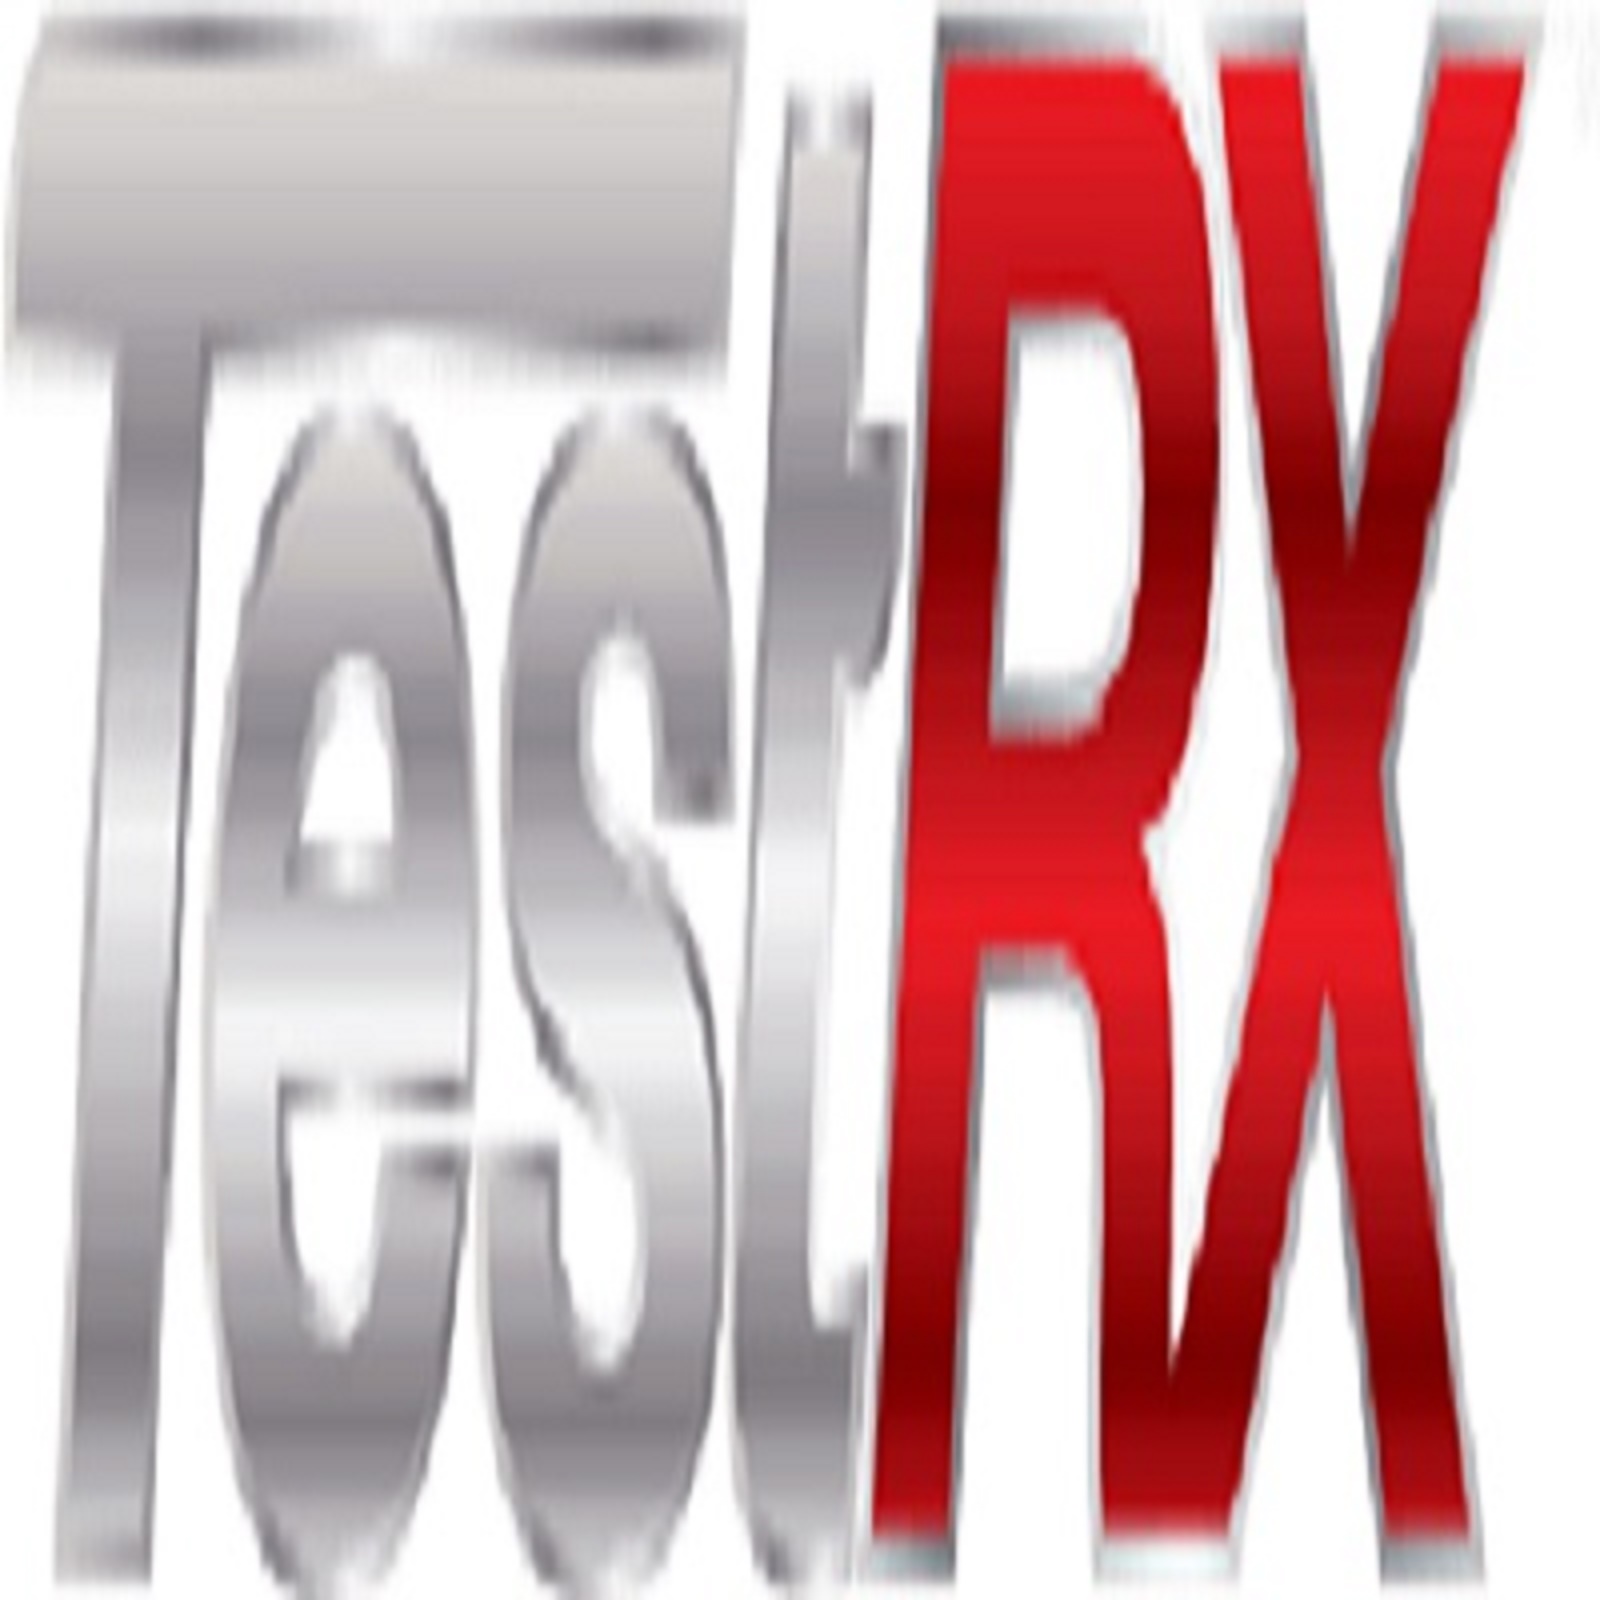 Test-RX.net